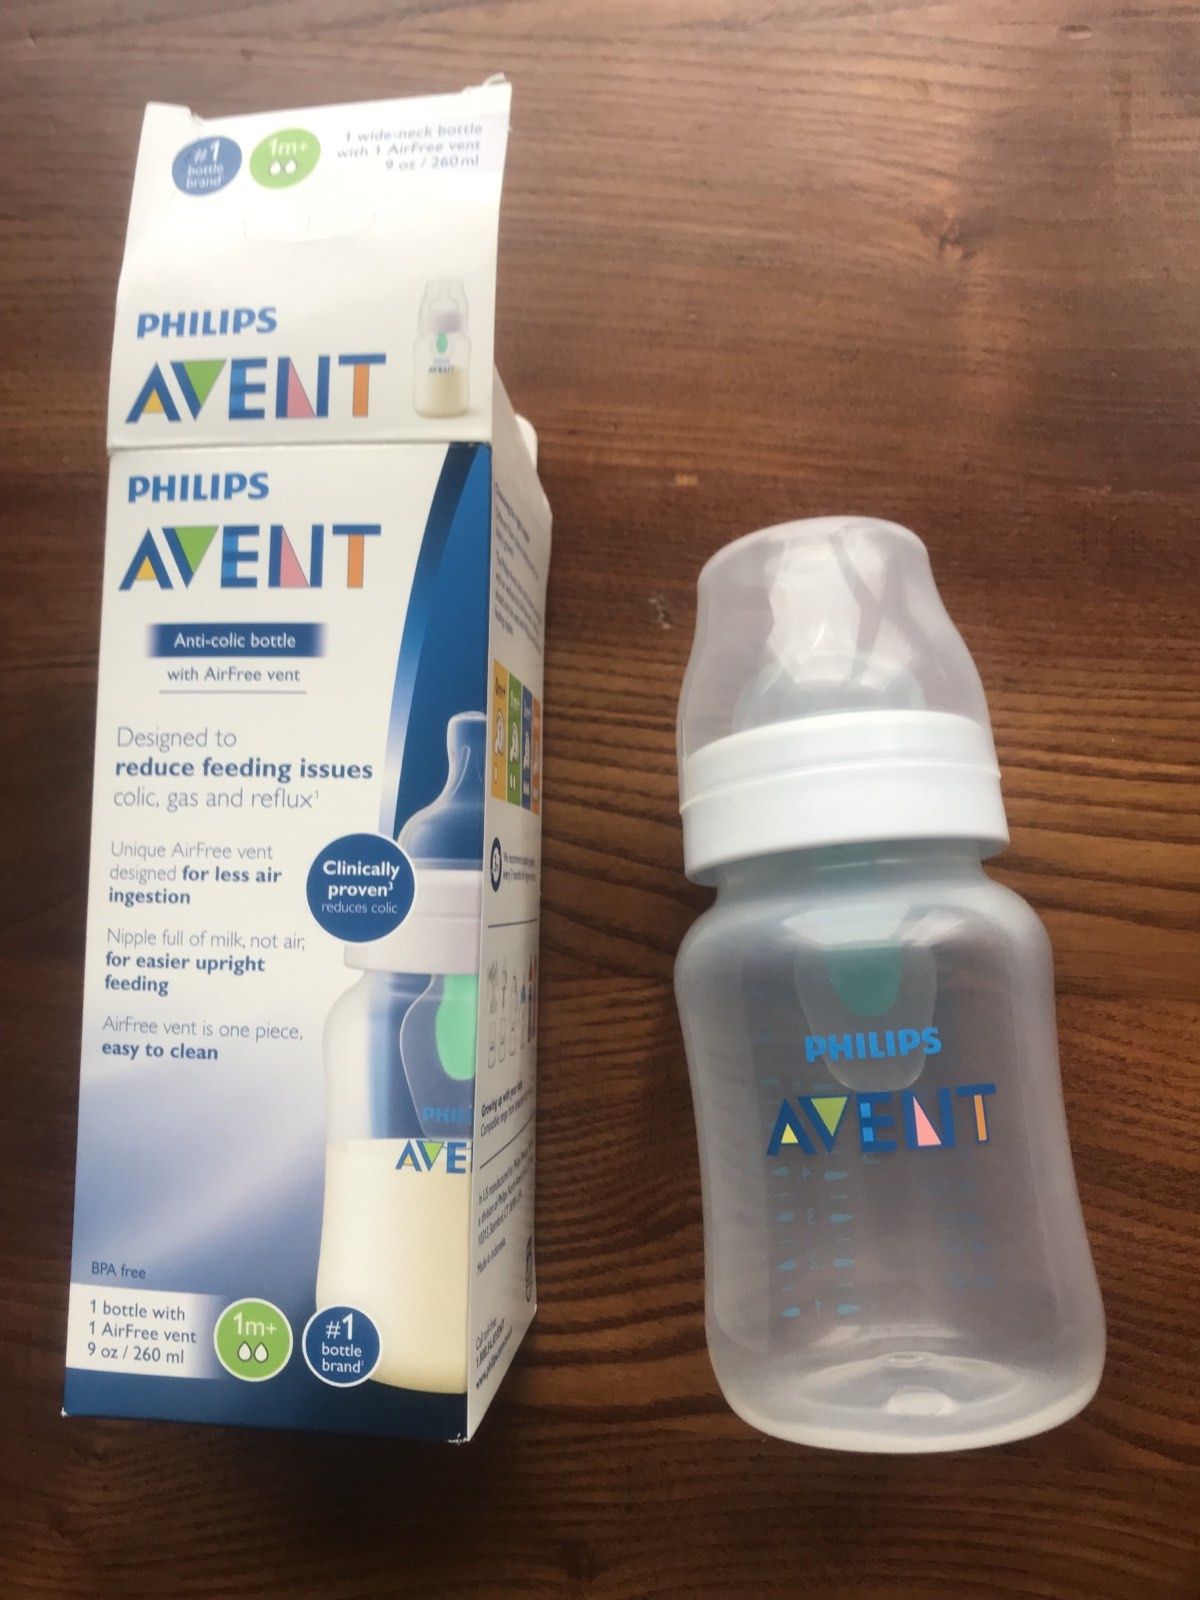 Fhilips Avent Anti-colic bottle